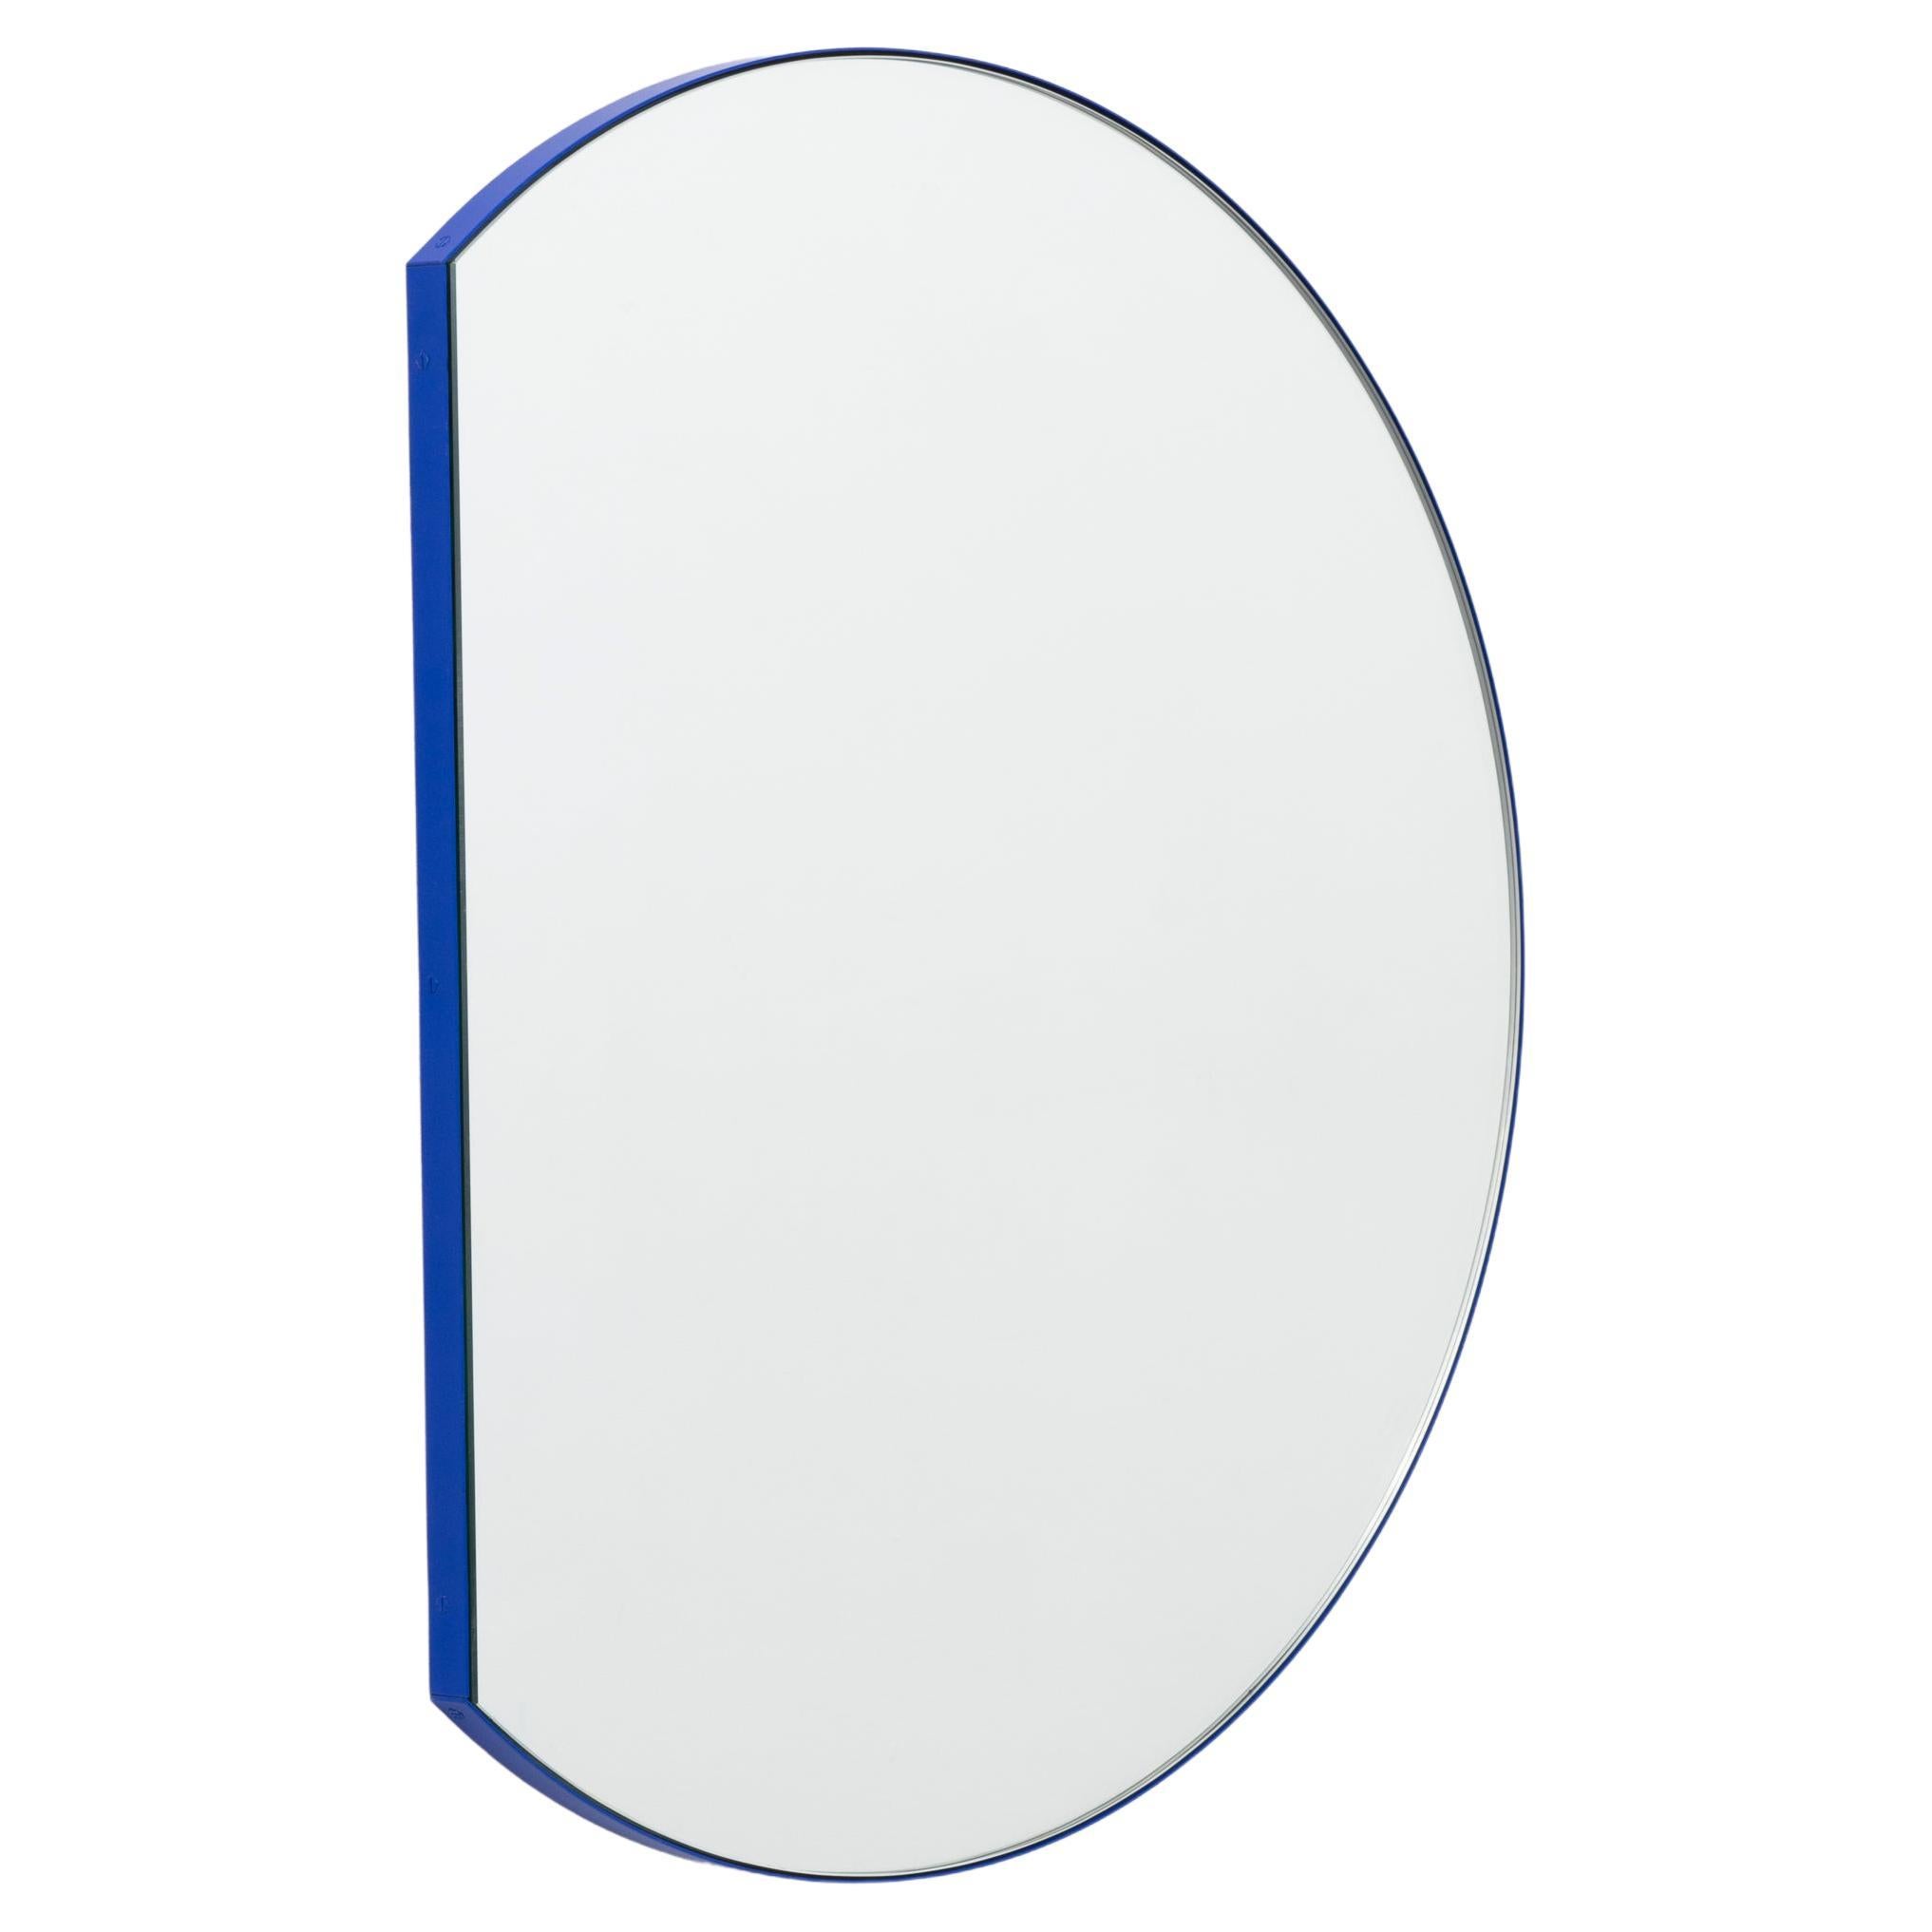 In Stock Orbis Trecus Cropped Round Modern Mirror, Blue Frame, Medium For Sale